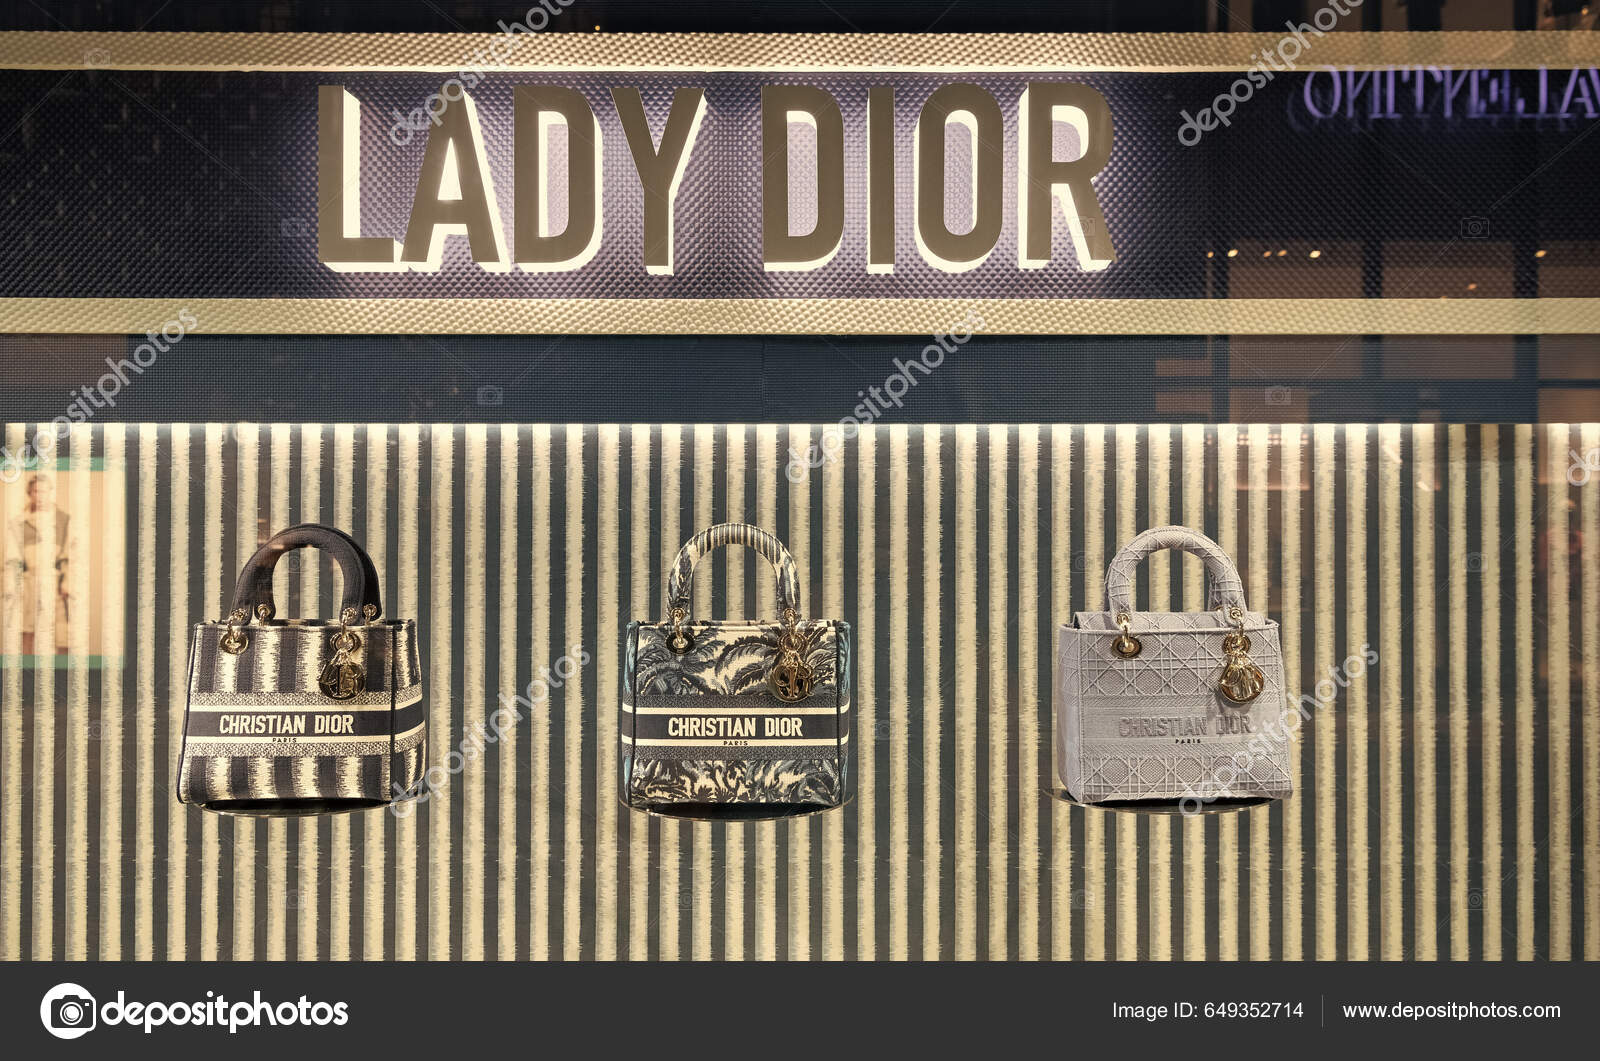 Miami Usa Marts 2021 Belyst Lady Dior Butik Vitrine Viser – Redaktionelle  stock-fotos © stetsik #649352714